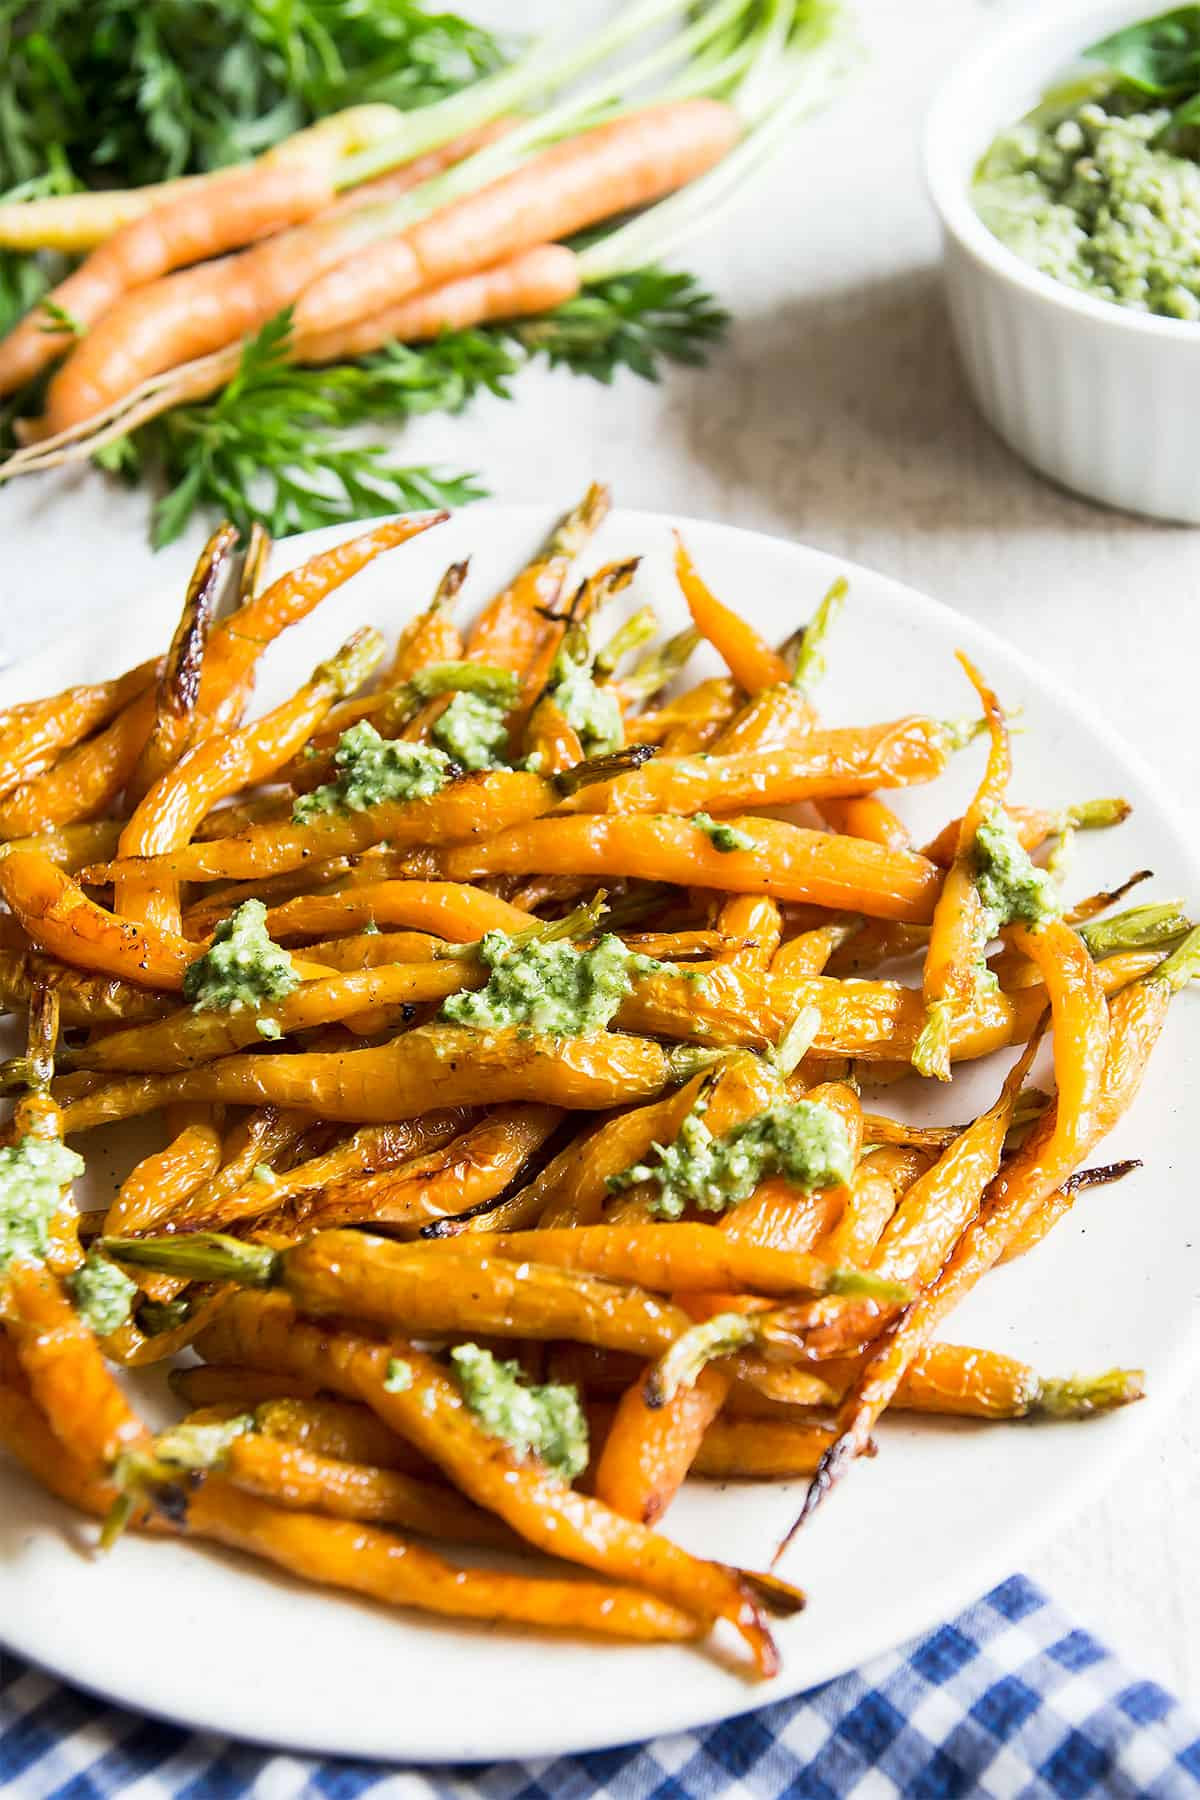 Savory Baby Carrot Recipes
 Maple Roasted Baby Carrots with Pesto LeelaLicious